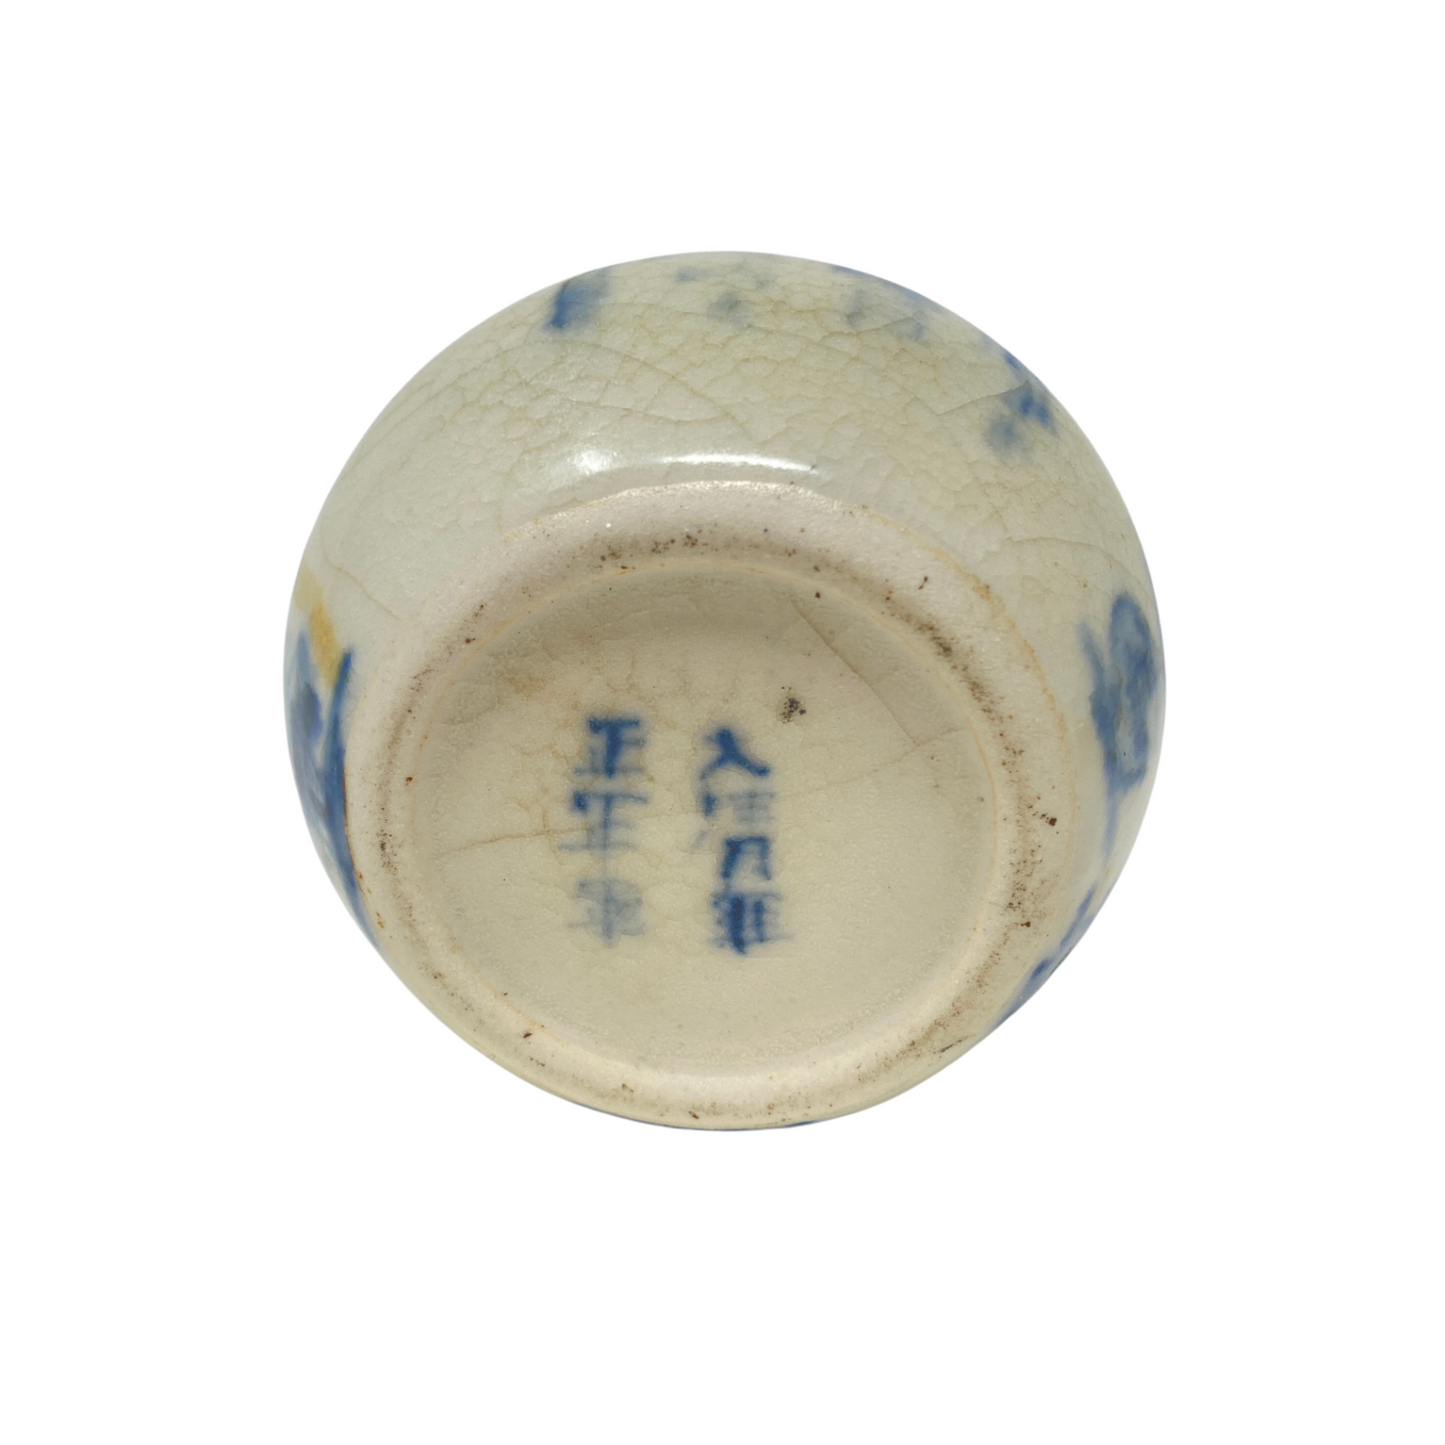 Antique Chinese "Bleu de Hue" Porcelain Herbal Pot